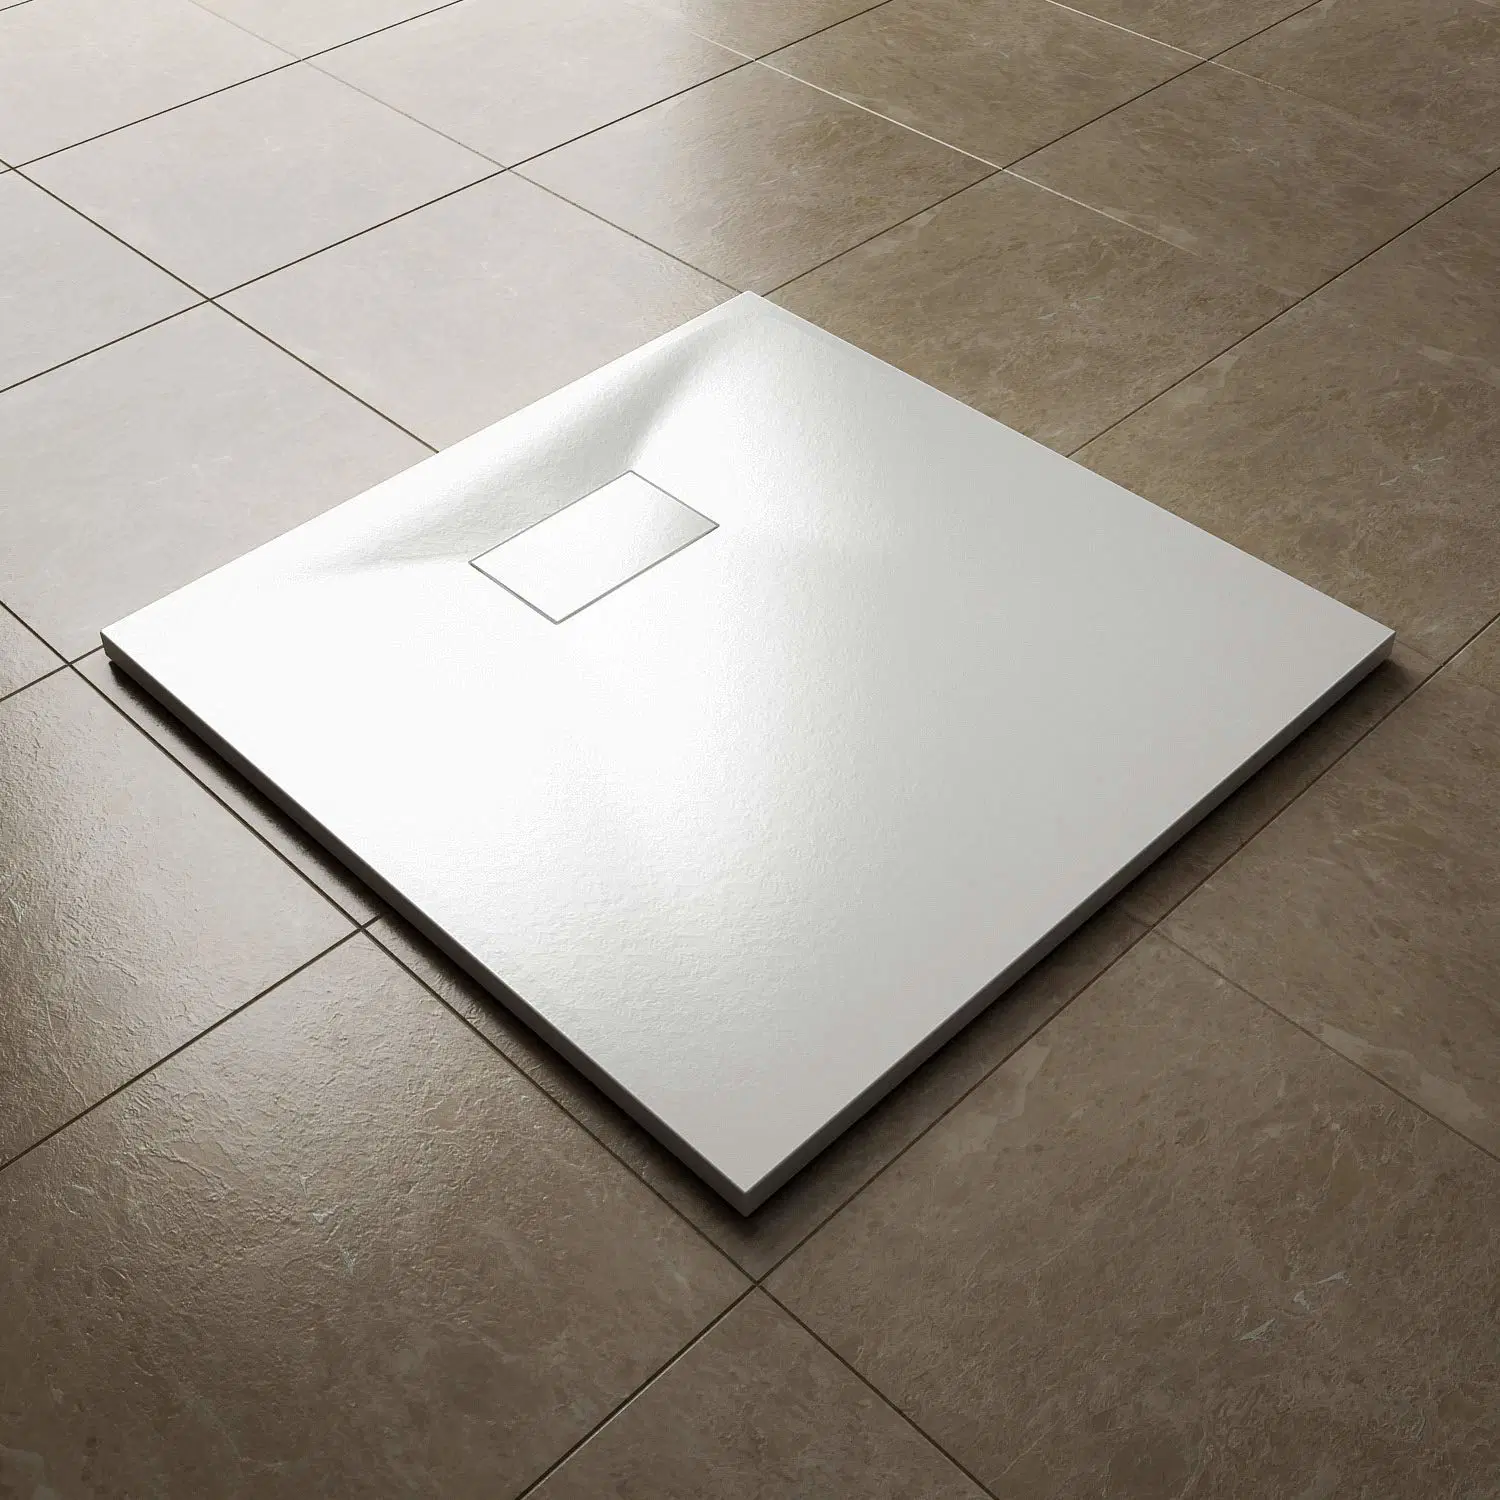 SMC blanca rectangular plato de ducha ABS con acabado de superficie de piedra